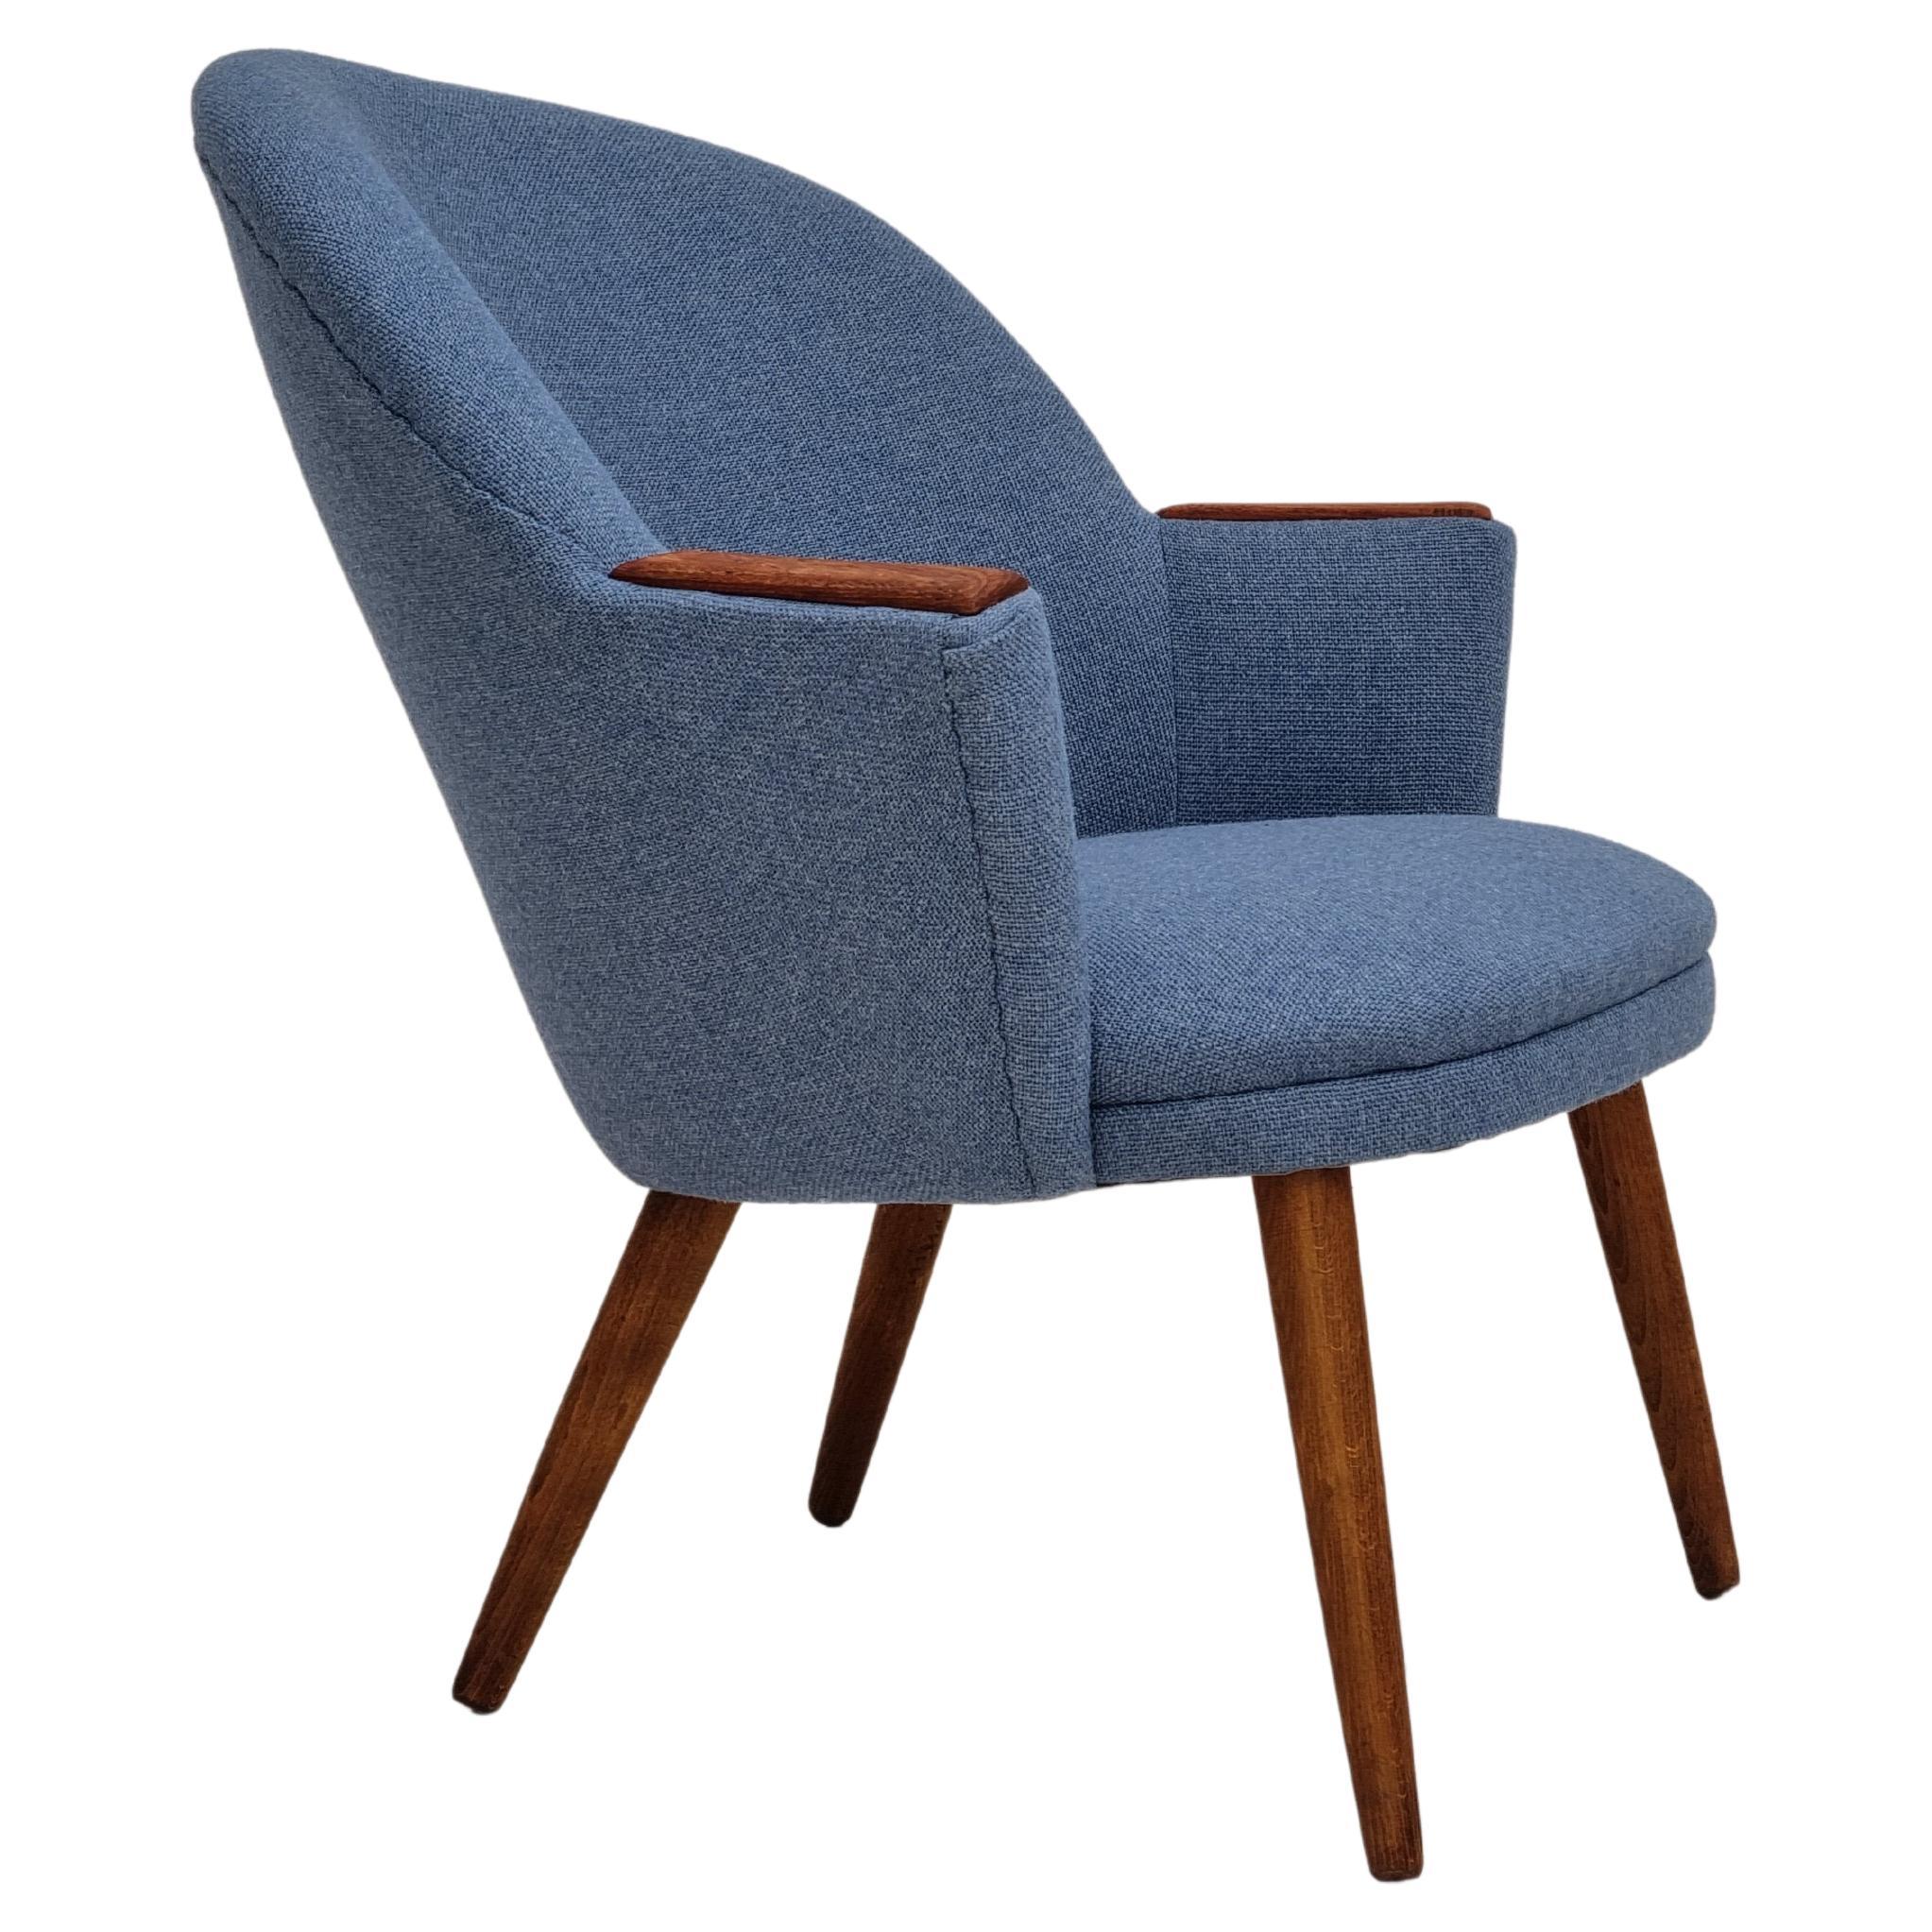 1960er Jahre, dänisches Design, komplett neu gepolsterter Loungesessel, Camira Furniture Wolle